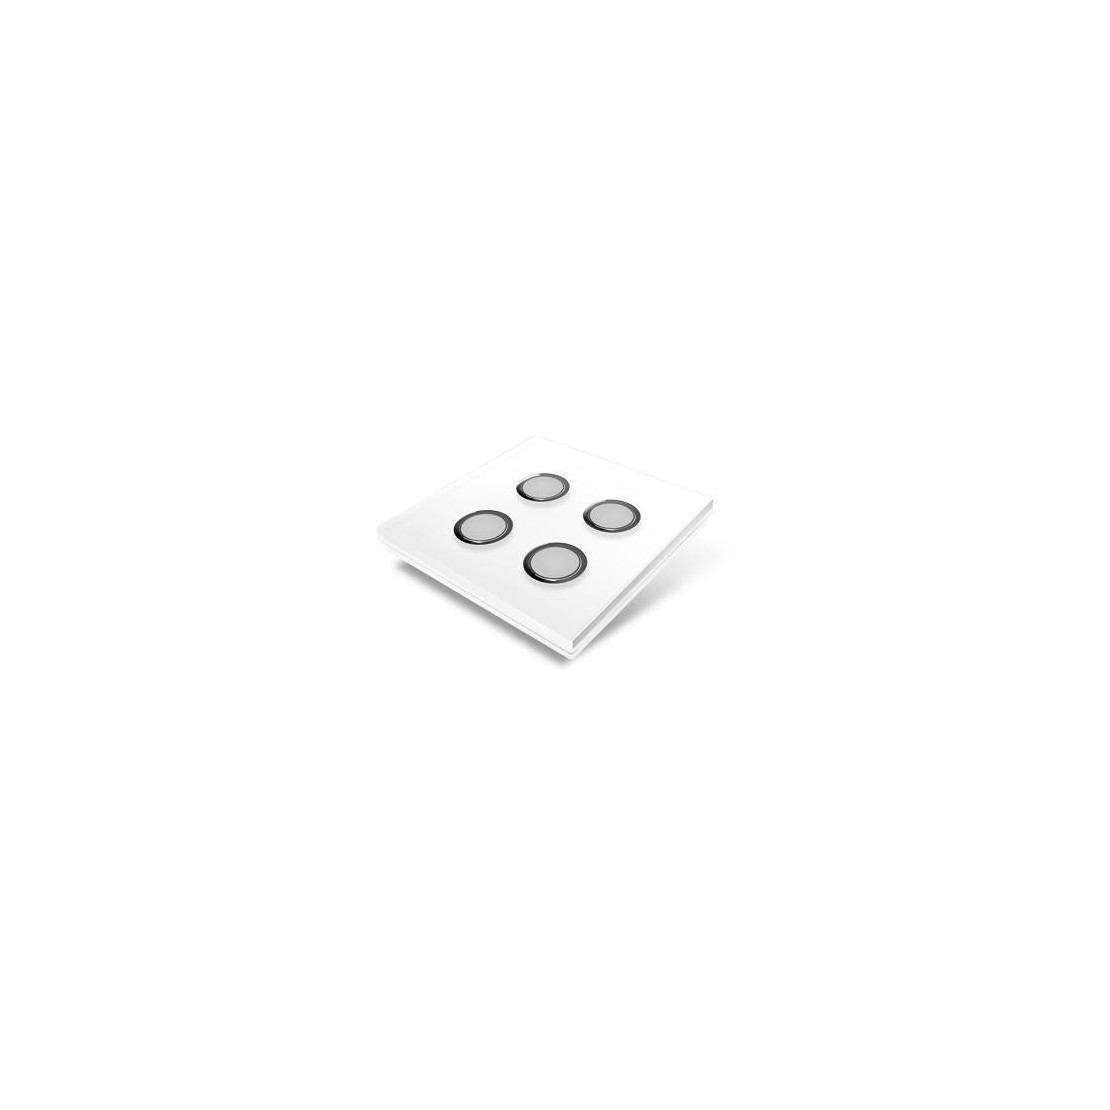 Switchplate for Edisio - white plastic